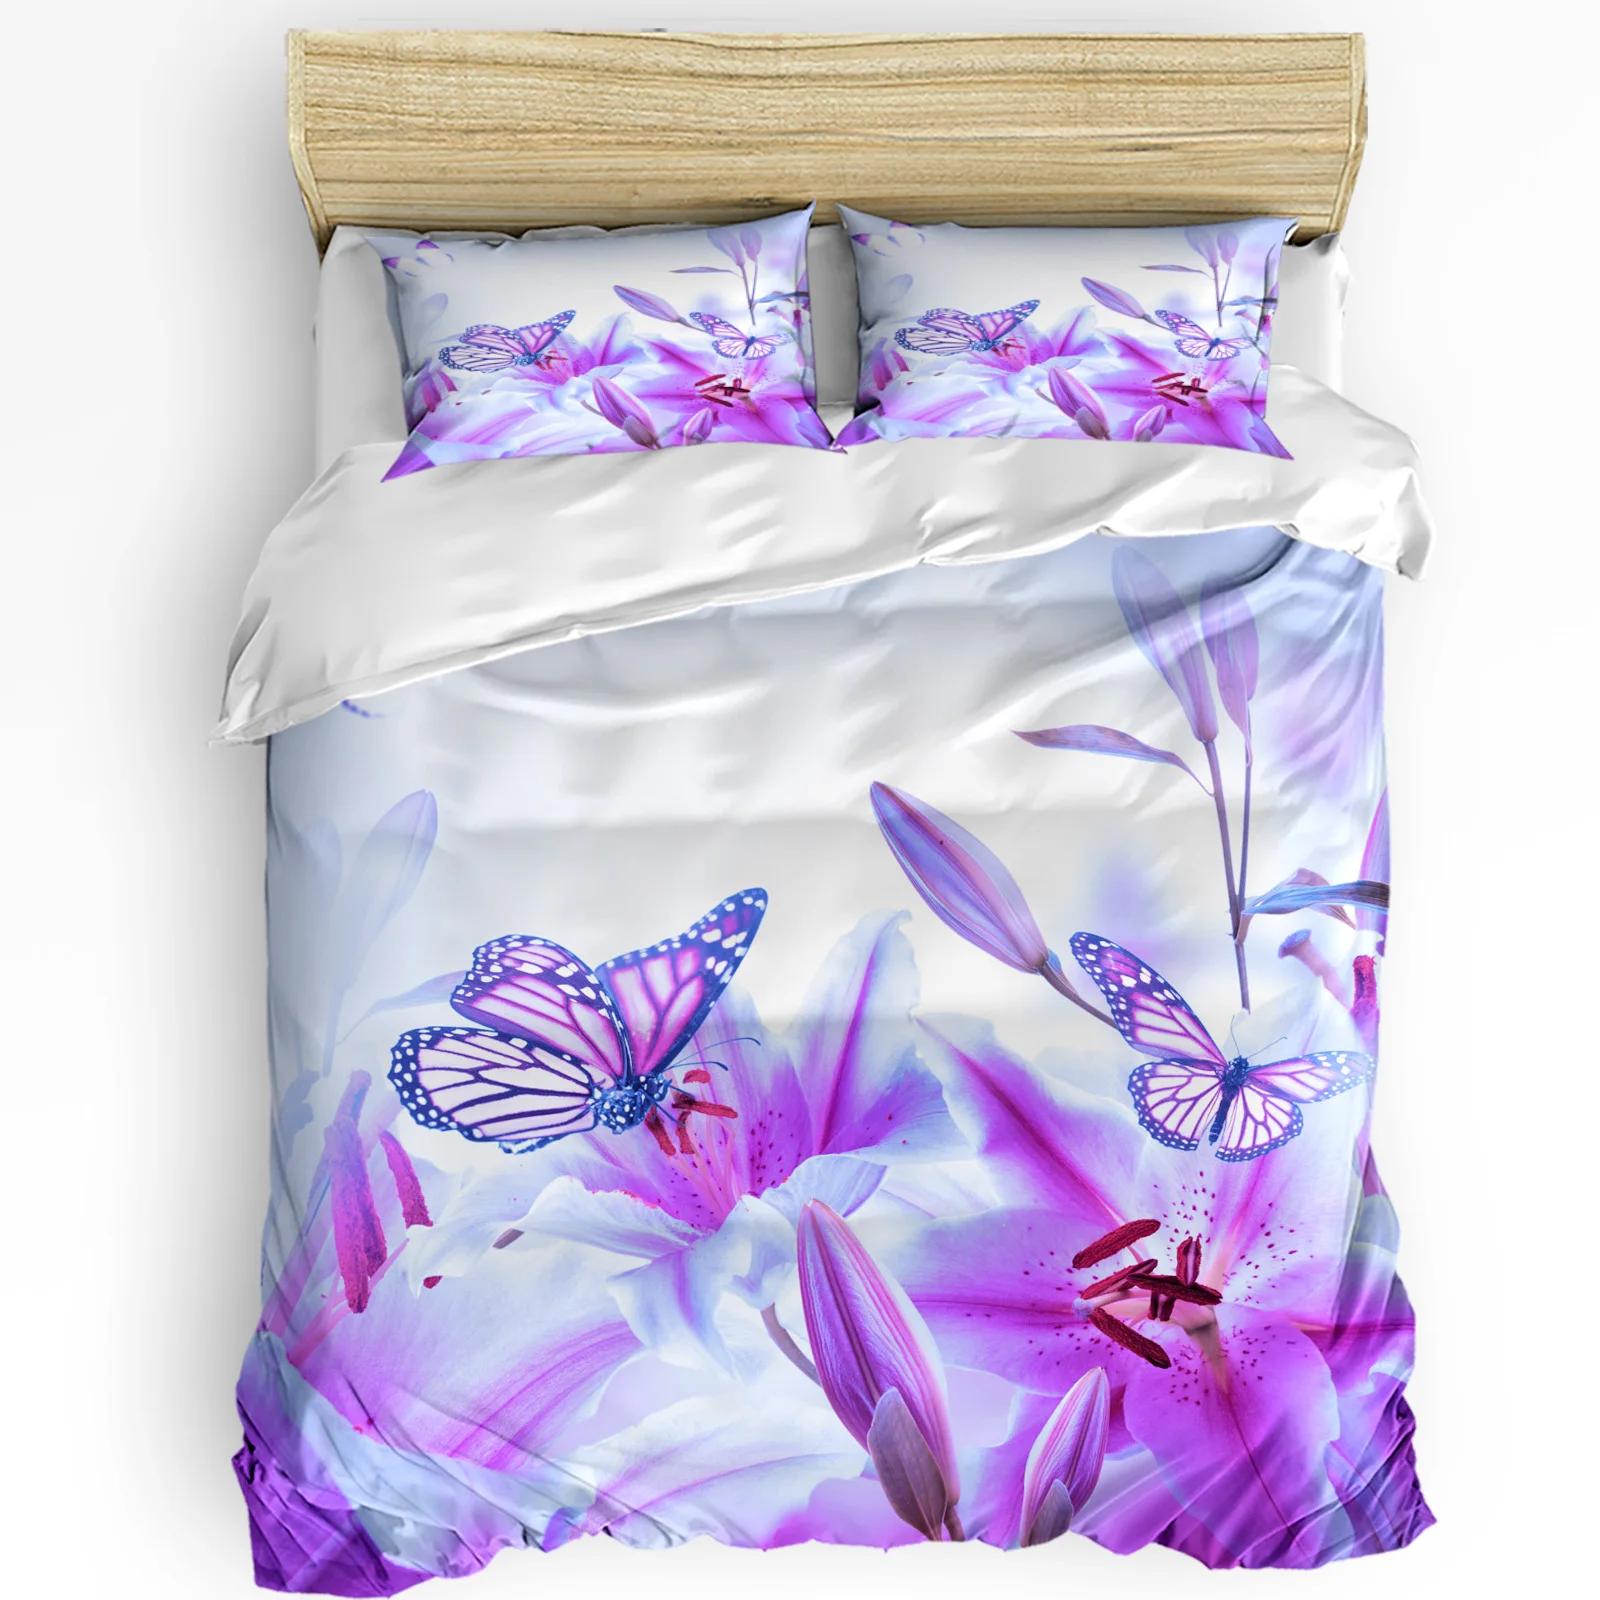 Purple Butterfly Lily Flower Bedding Set 3pcs Duvet Cover Pillowcase Kids Adult Quilt Cover Double Bed Set Home Text